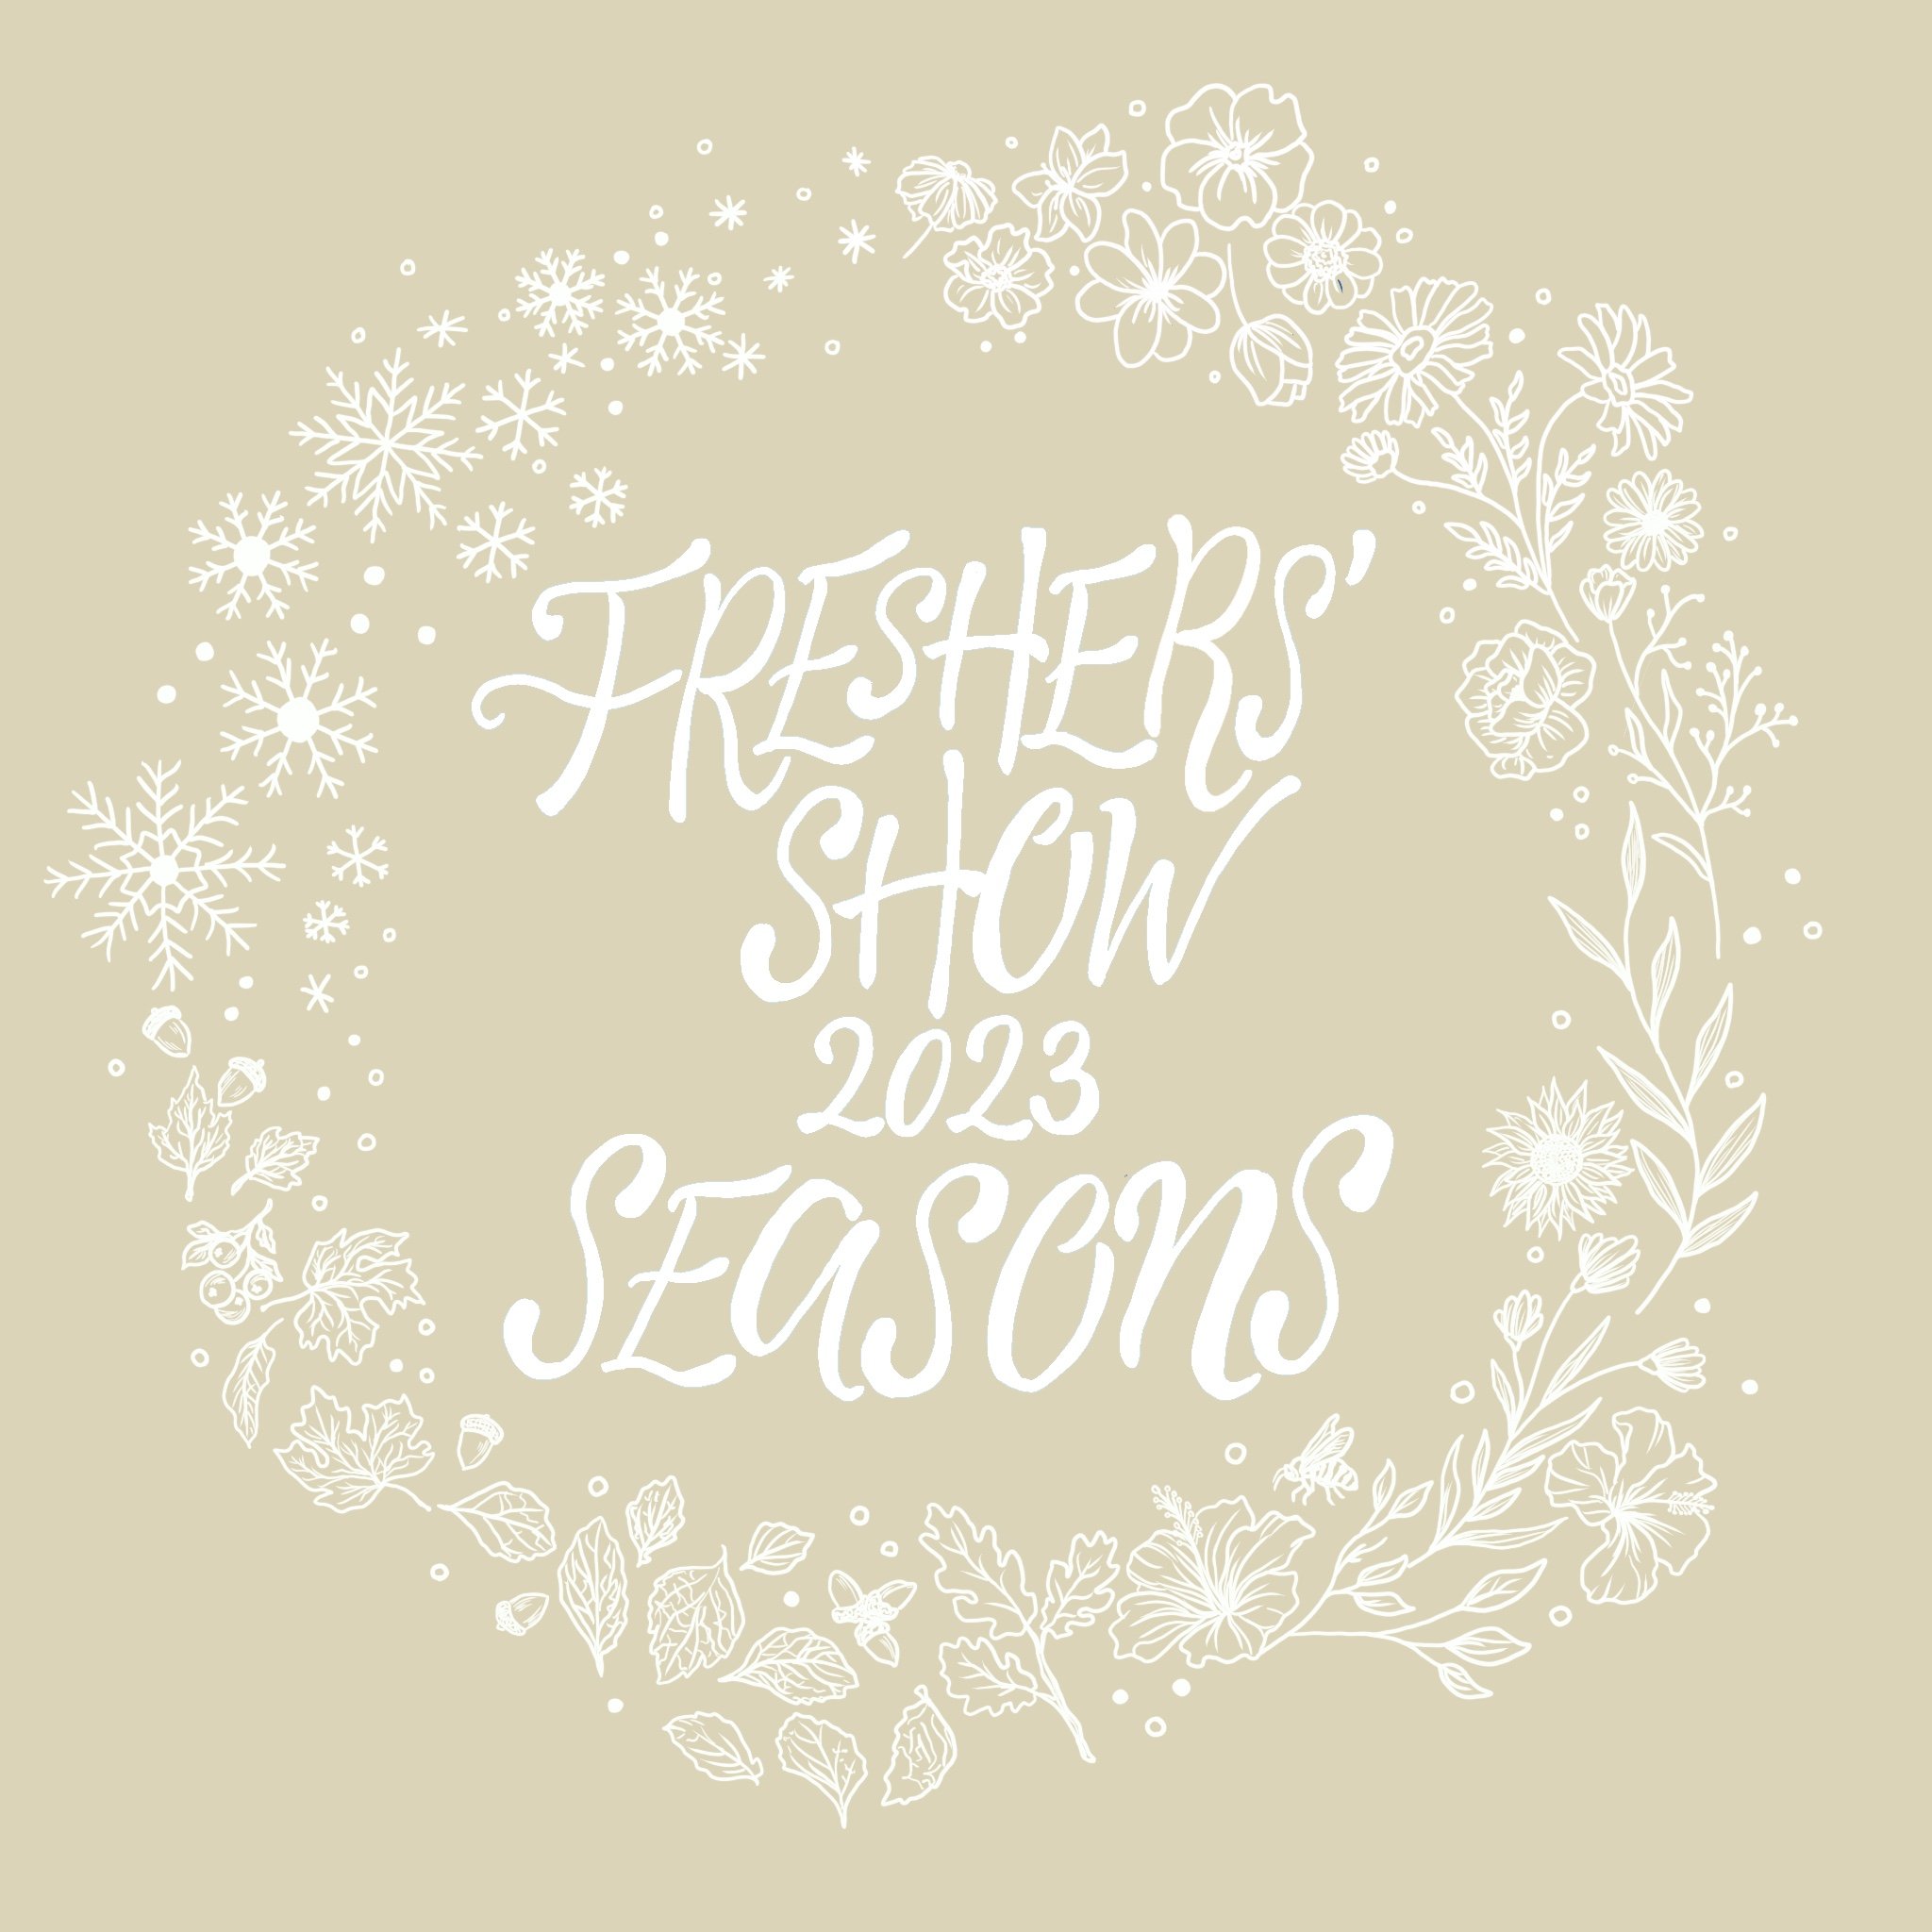 Beige logo that says "Fresher's show 2023 seasons"